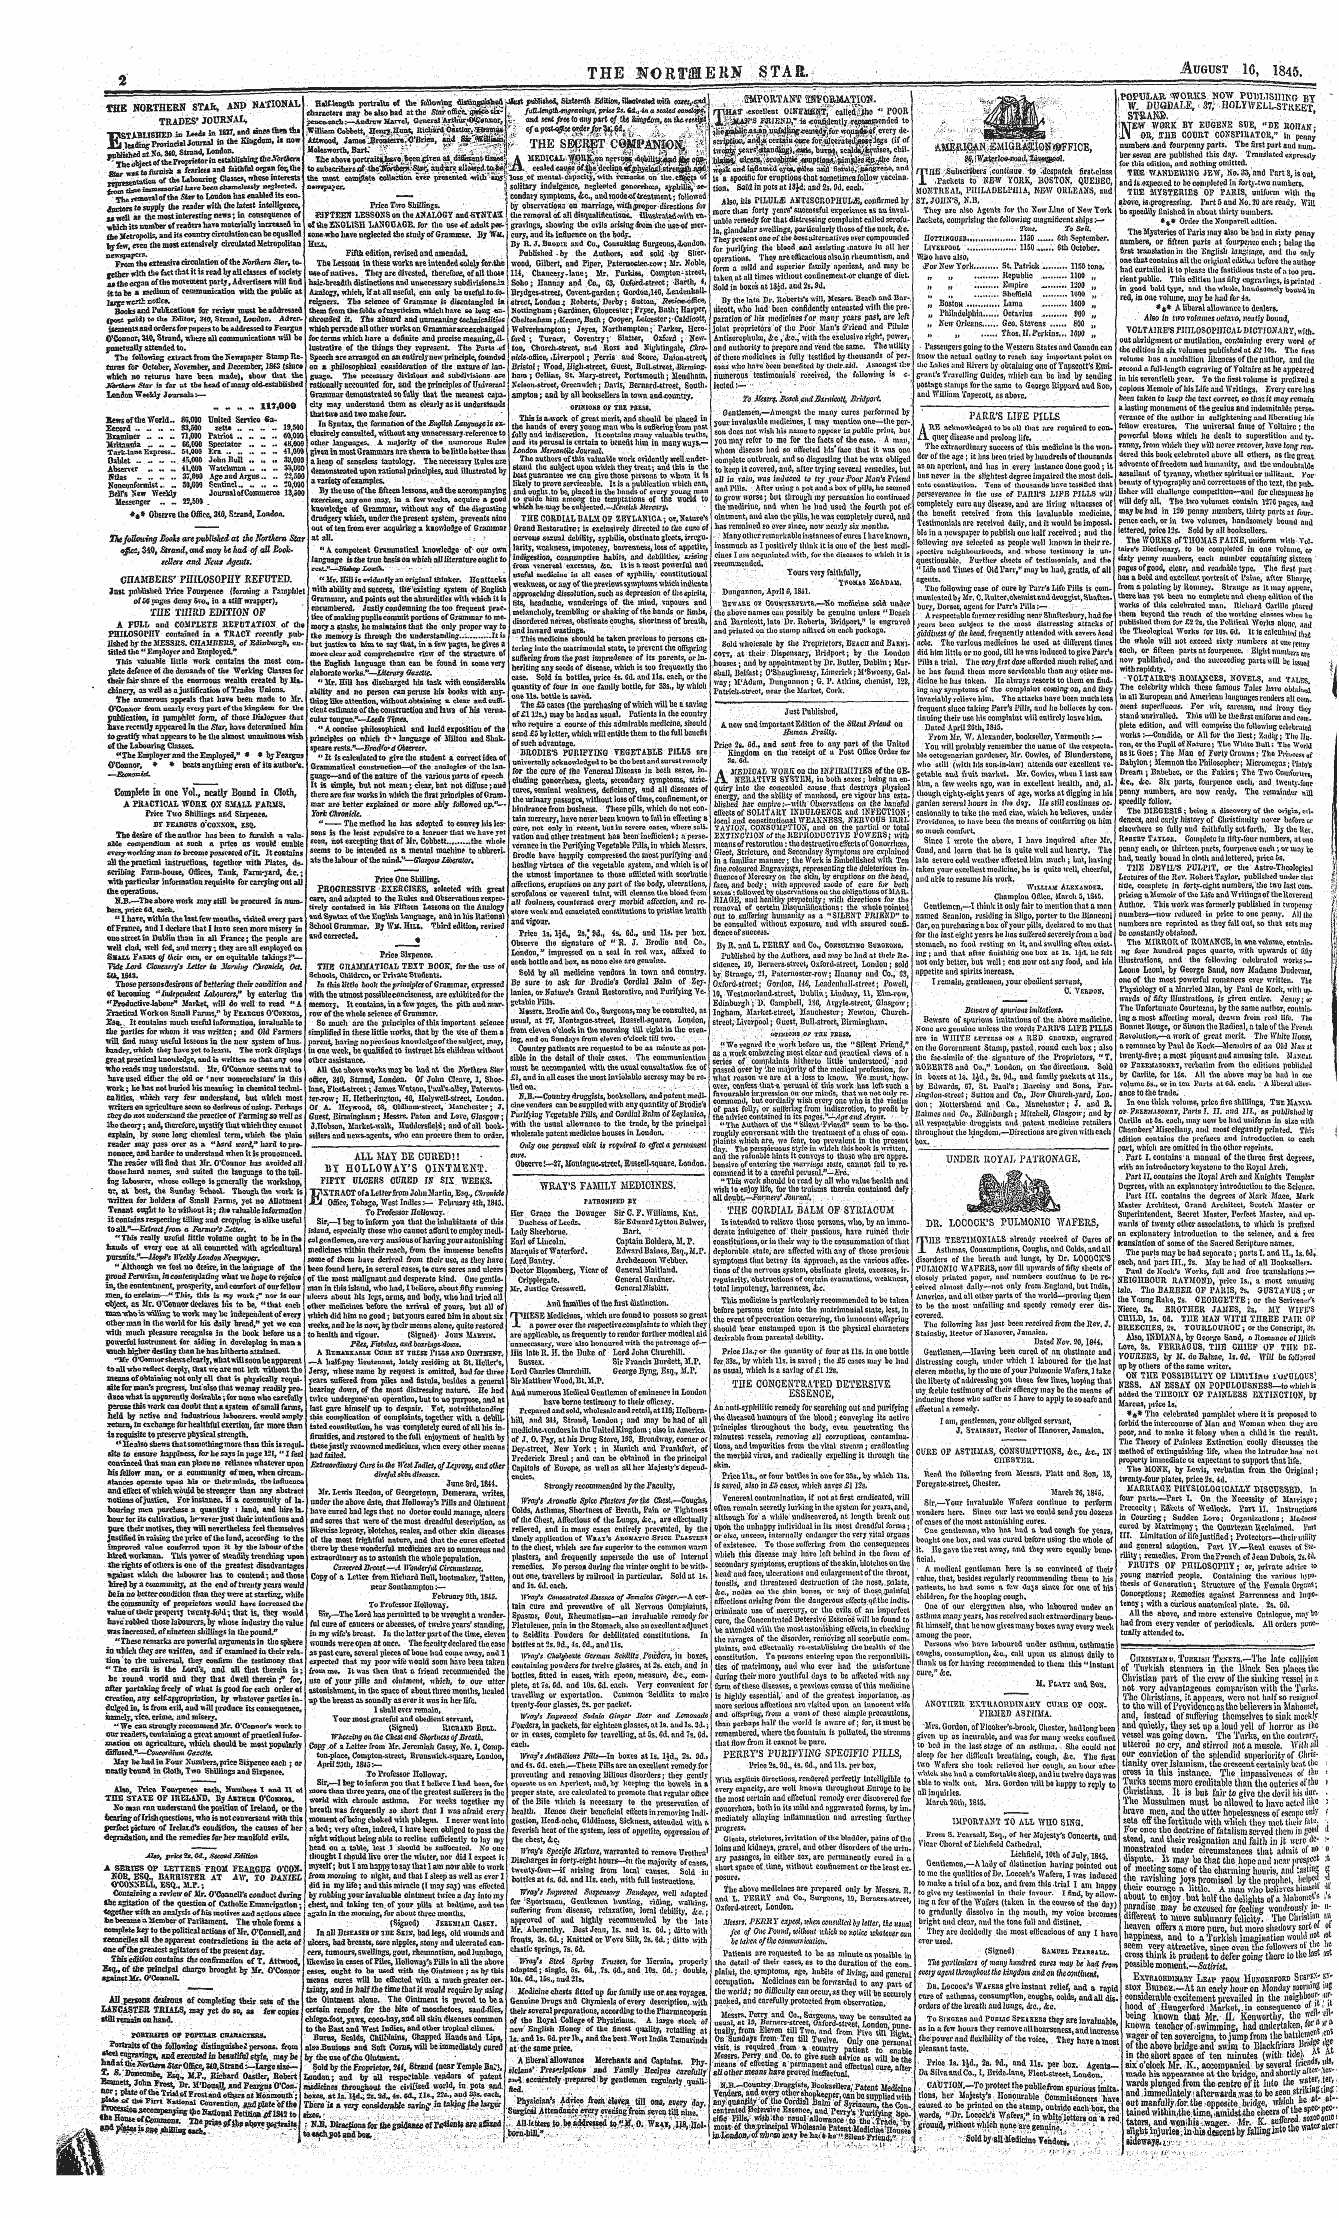 Northern Star (1837-1852): jS F Y, 3rd edition - Ad00203